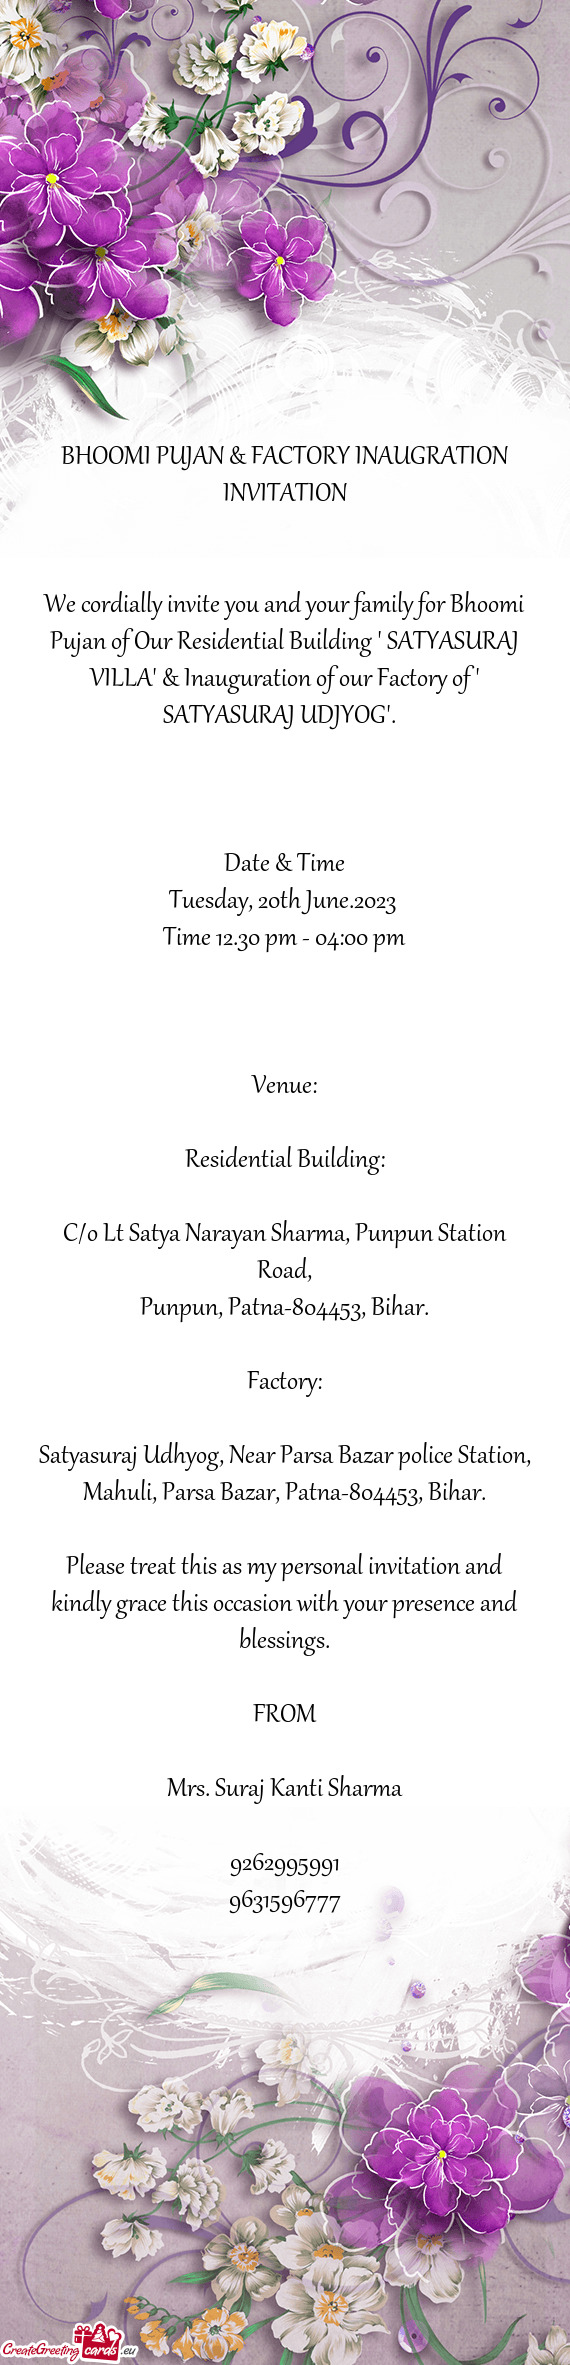 BHOOMI PUJAN & FACTORY INAUGRATION INVITATION